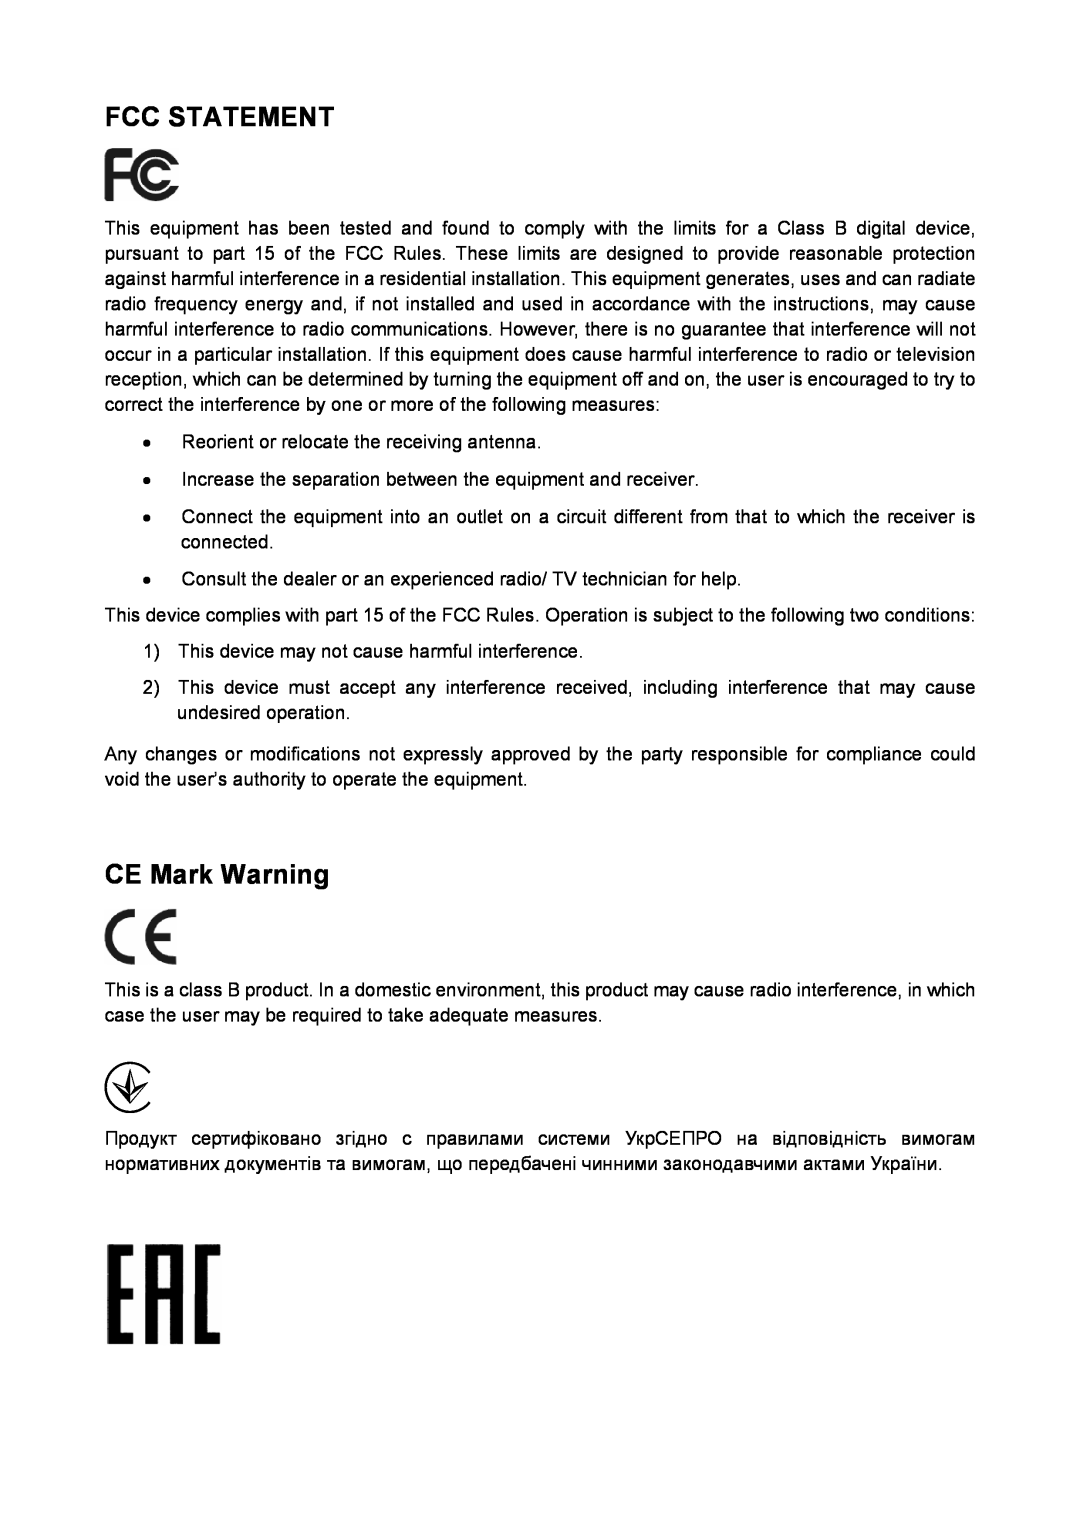 TP-Link TL-PA6030 manual Fcc Statement, CE Mark Warning 